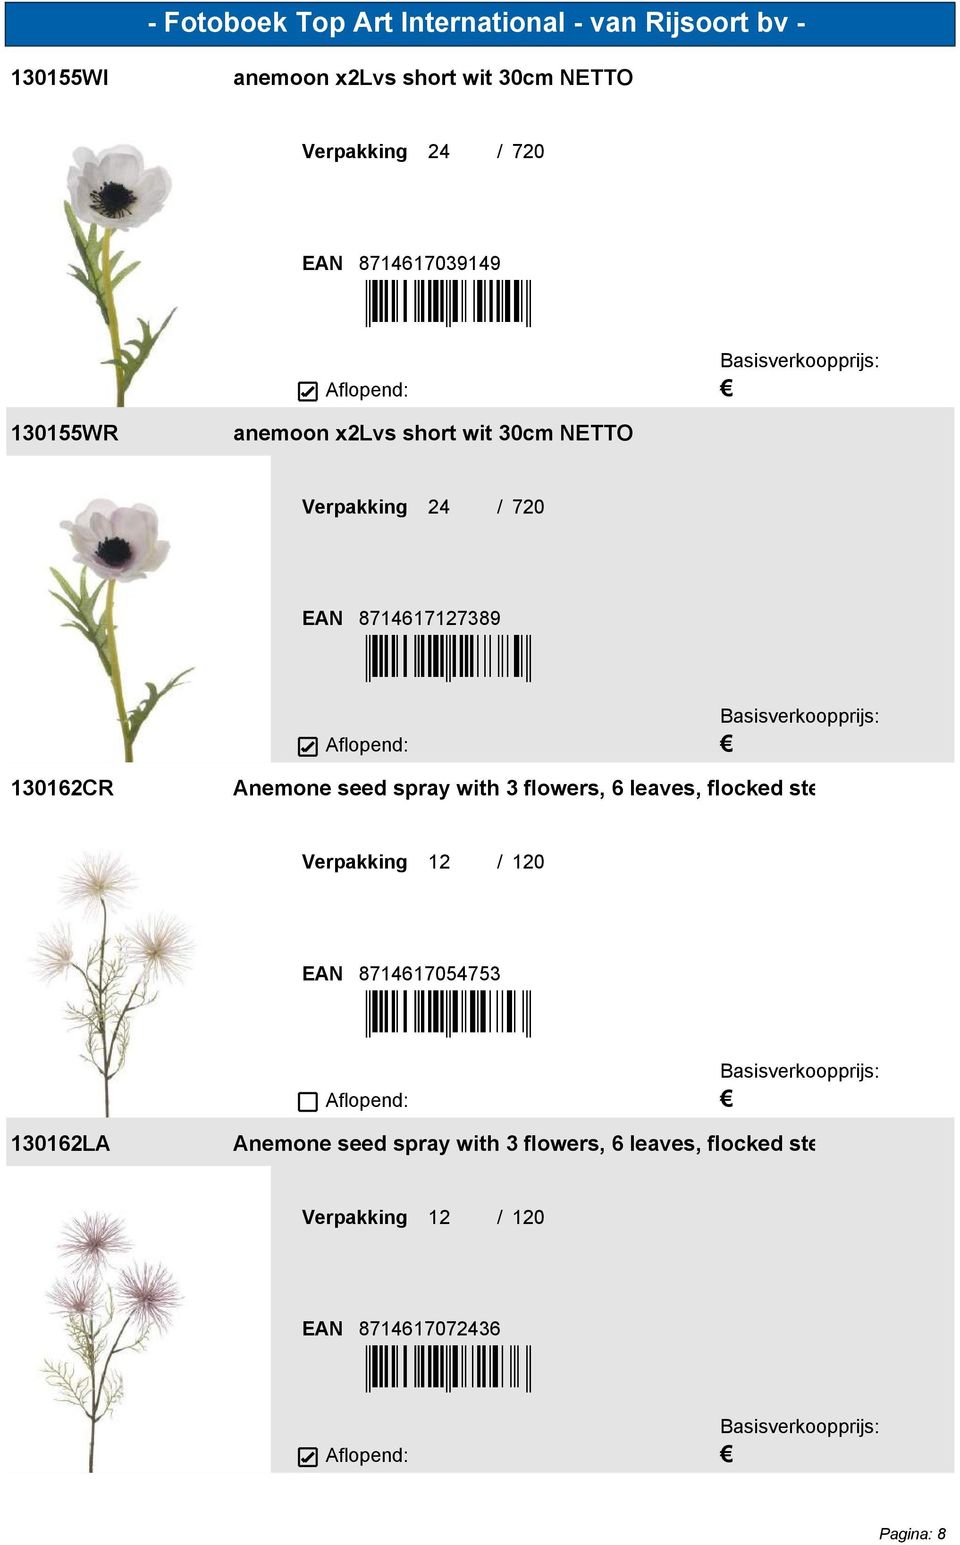 /] 130162CR Anemone seed spray with 3 flowers, 6 leaves, flocked stem, 63cm 12 / 120 8714617054753